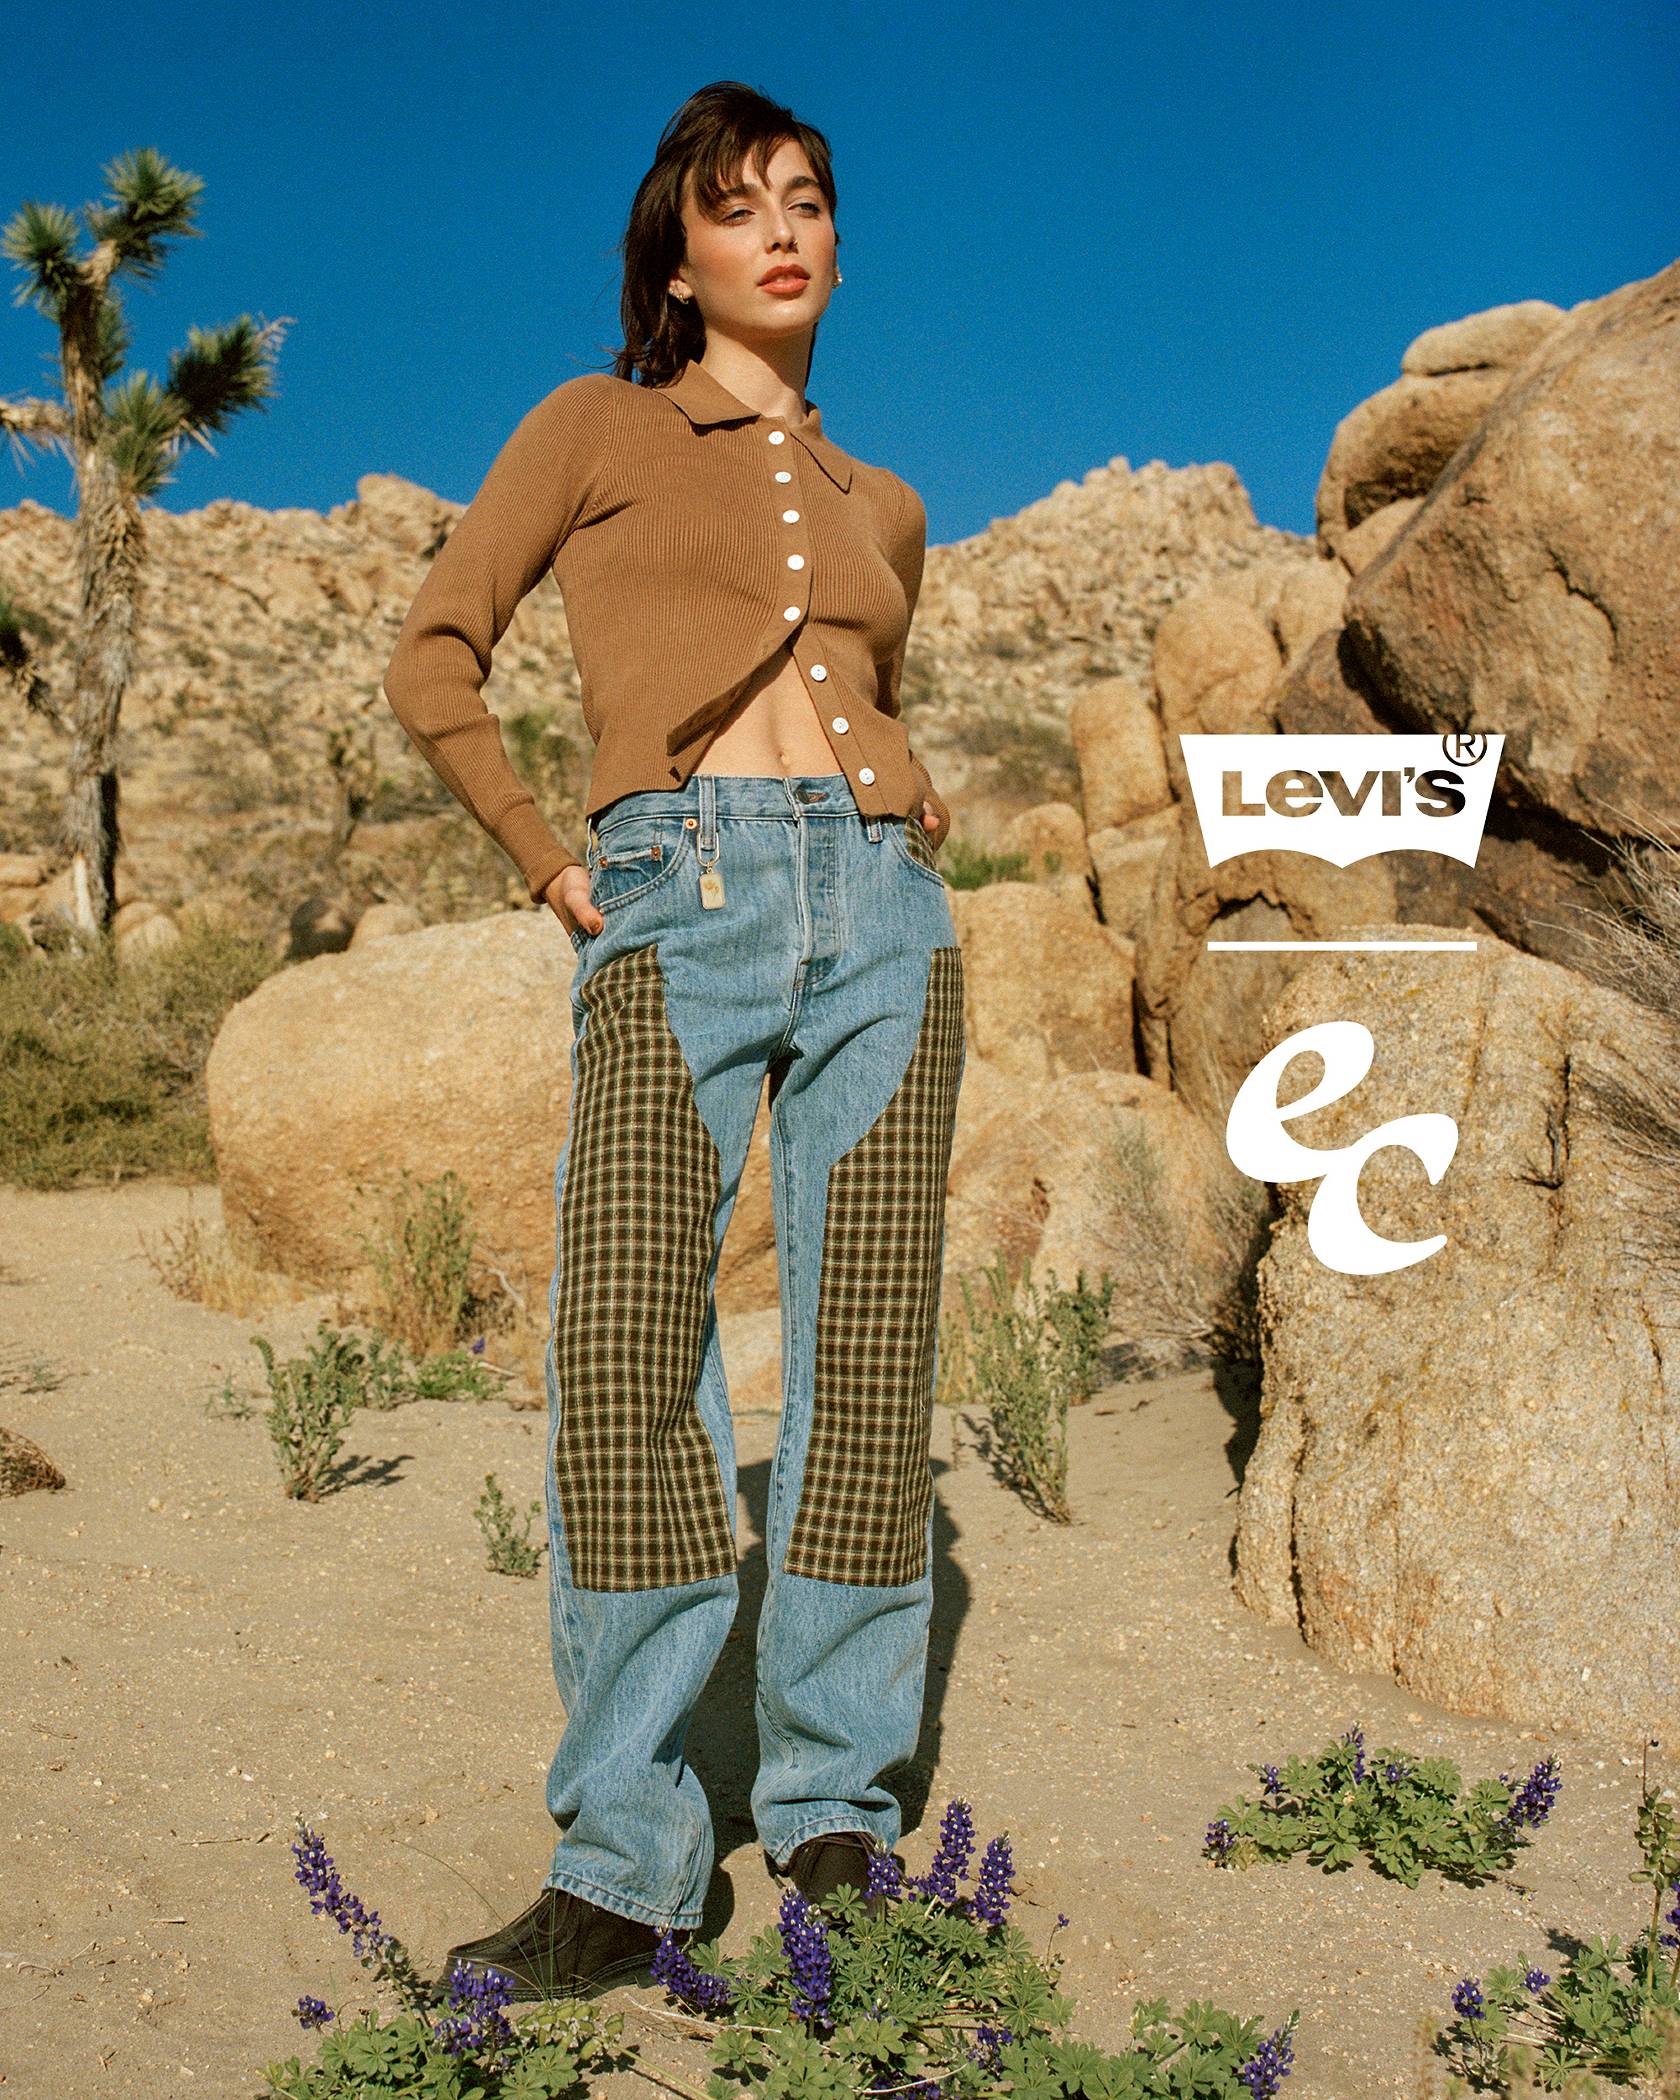 Photo of Emma Chamberlain posing in Levi's® x Emma Chamberlain clothing against a desert backdrop